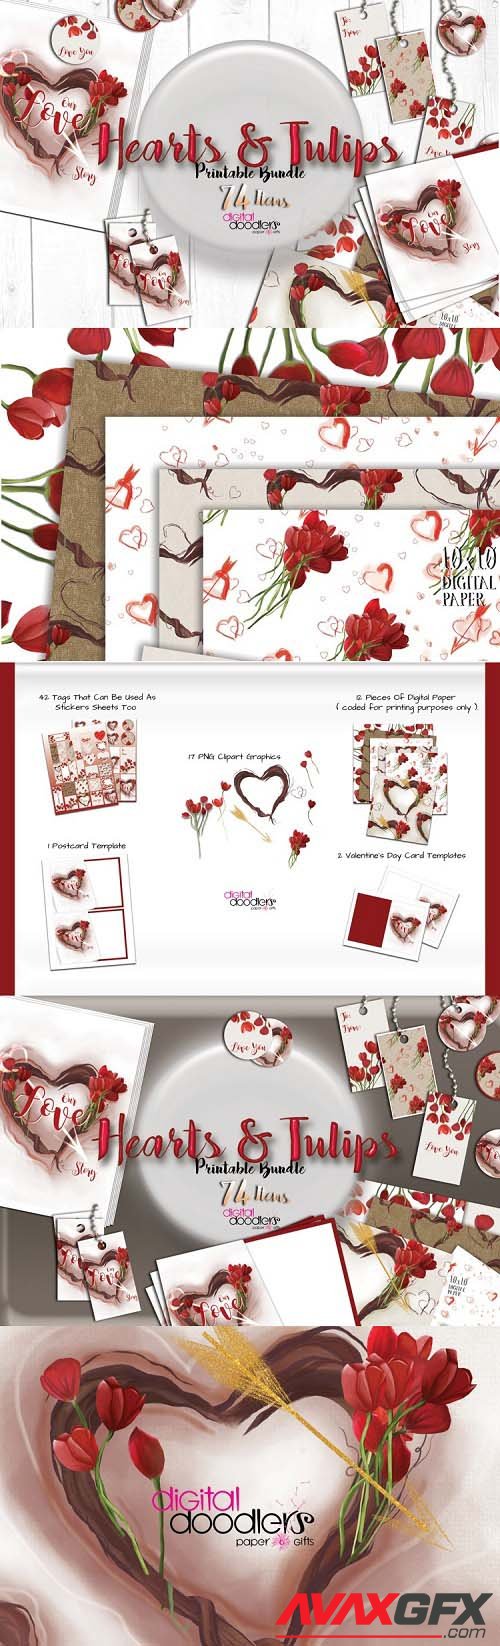 Hand Painted Hearts & Tulips Bundle - 54020 - Cupid Hearts Watercolor Bundle